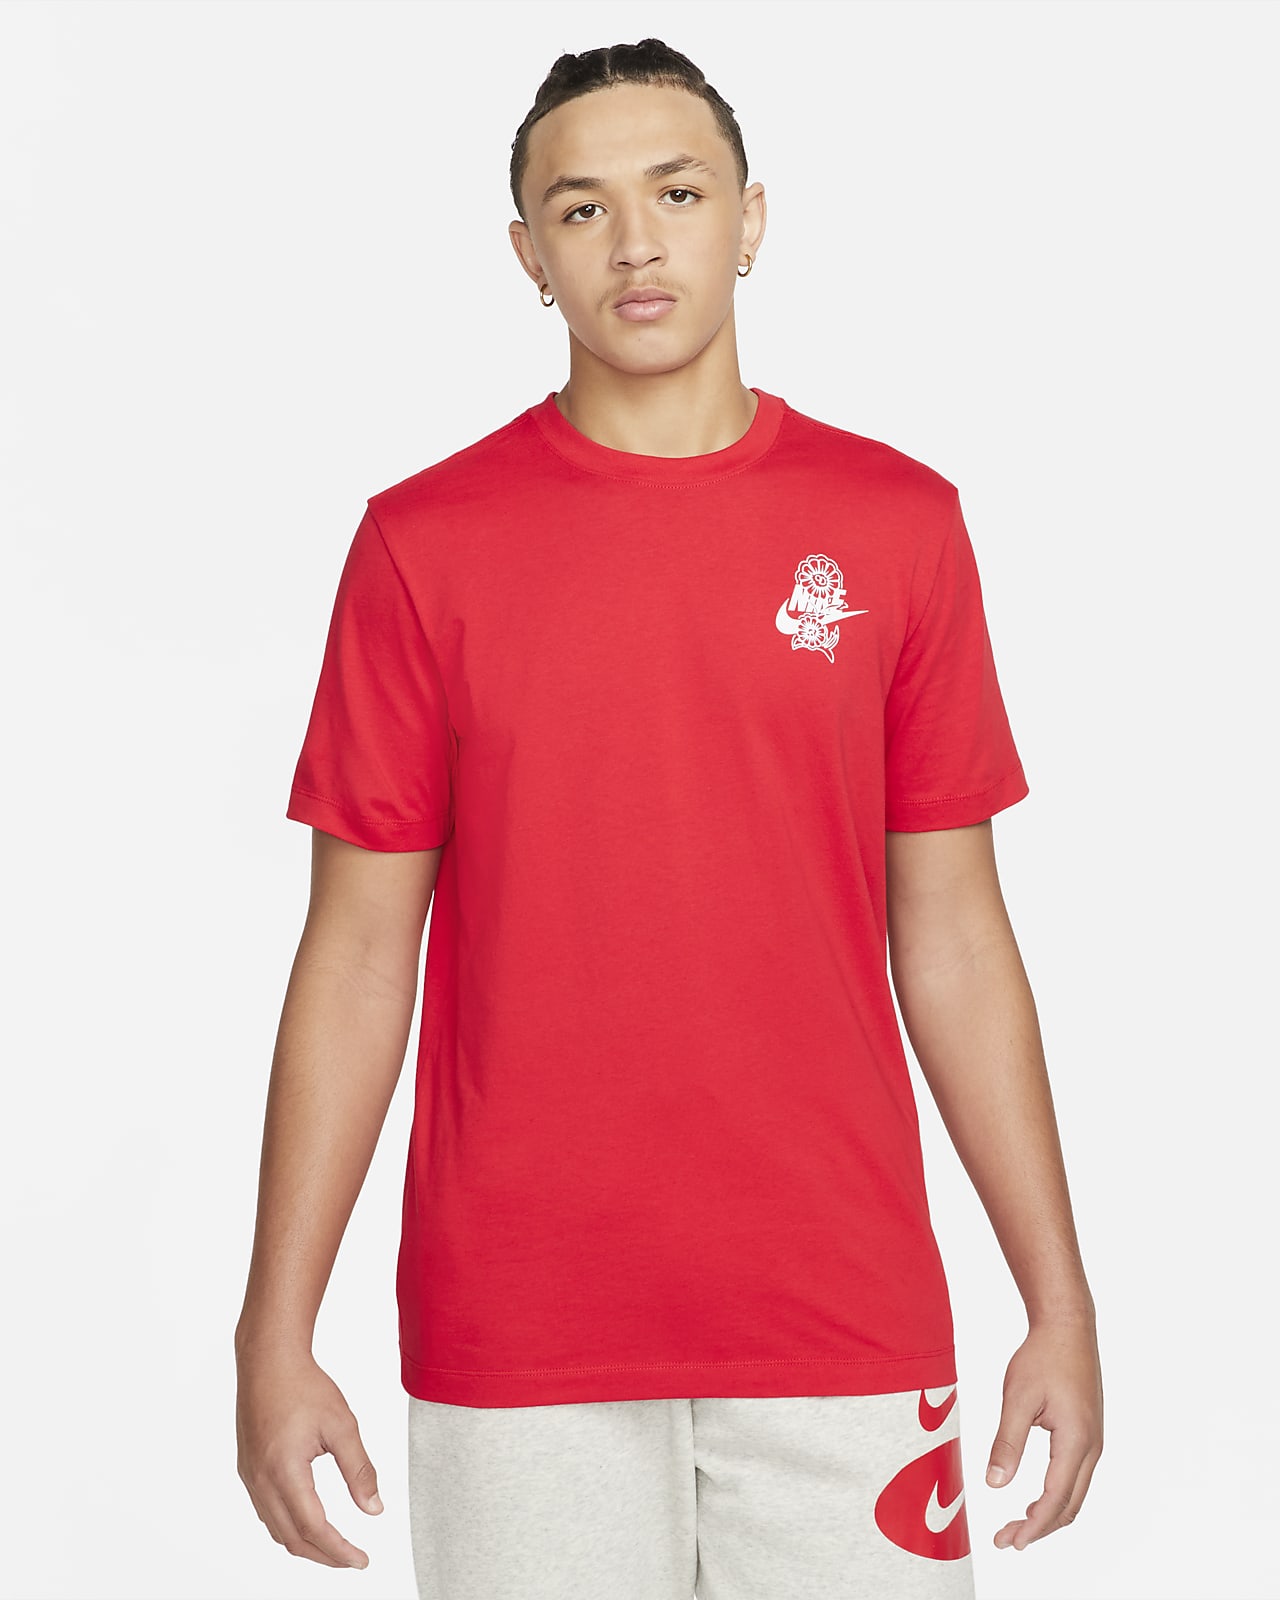 Tee-shirt Nike Sportswear pour Homme